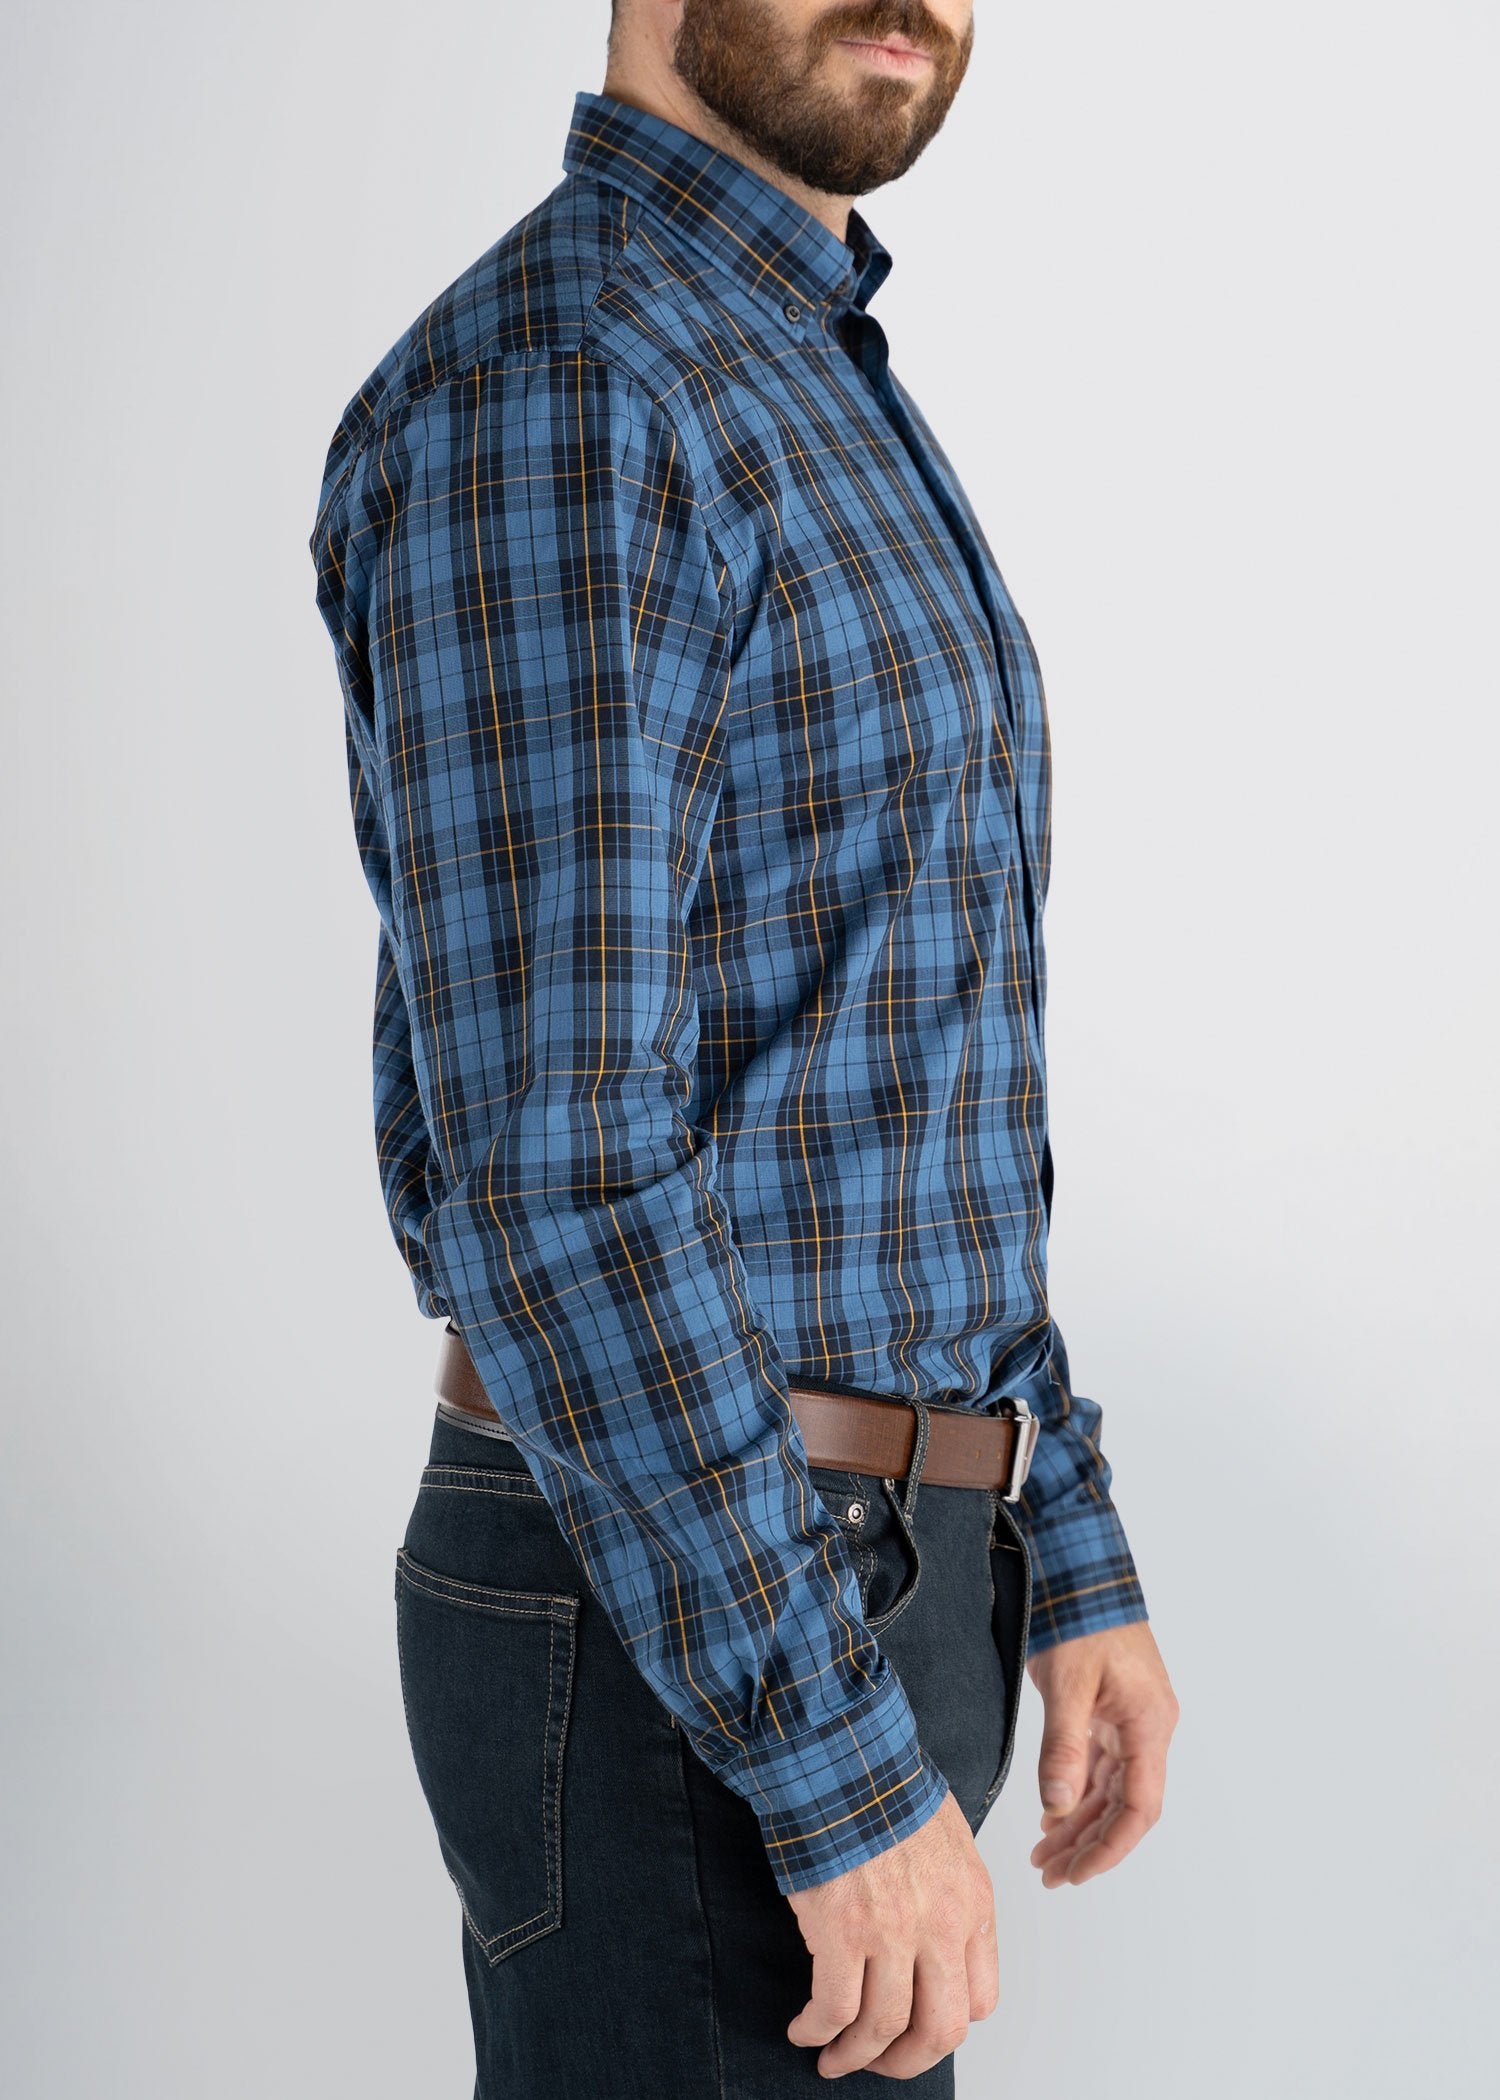 Men's Denim Shirts & Jeans Shirts Online | John Henric